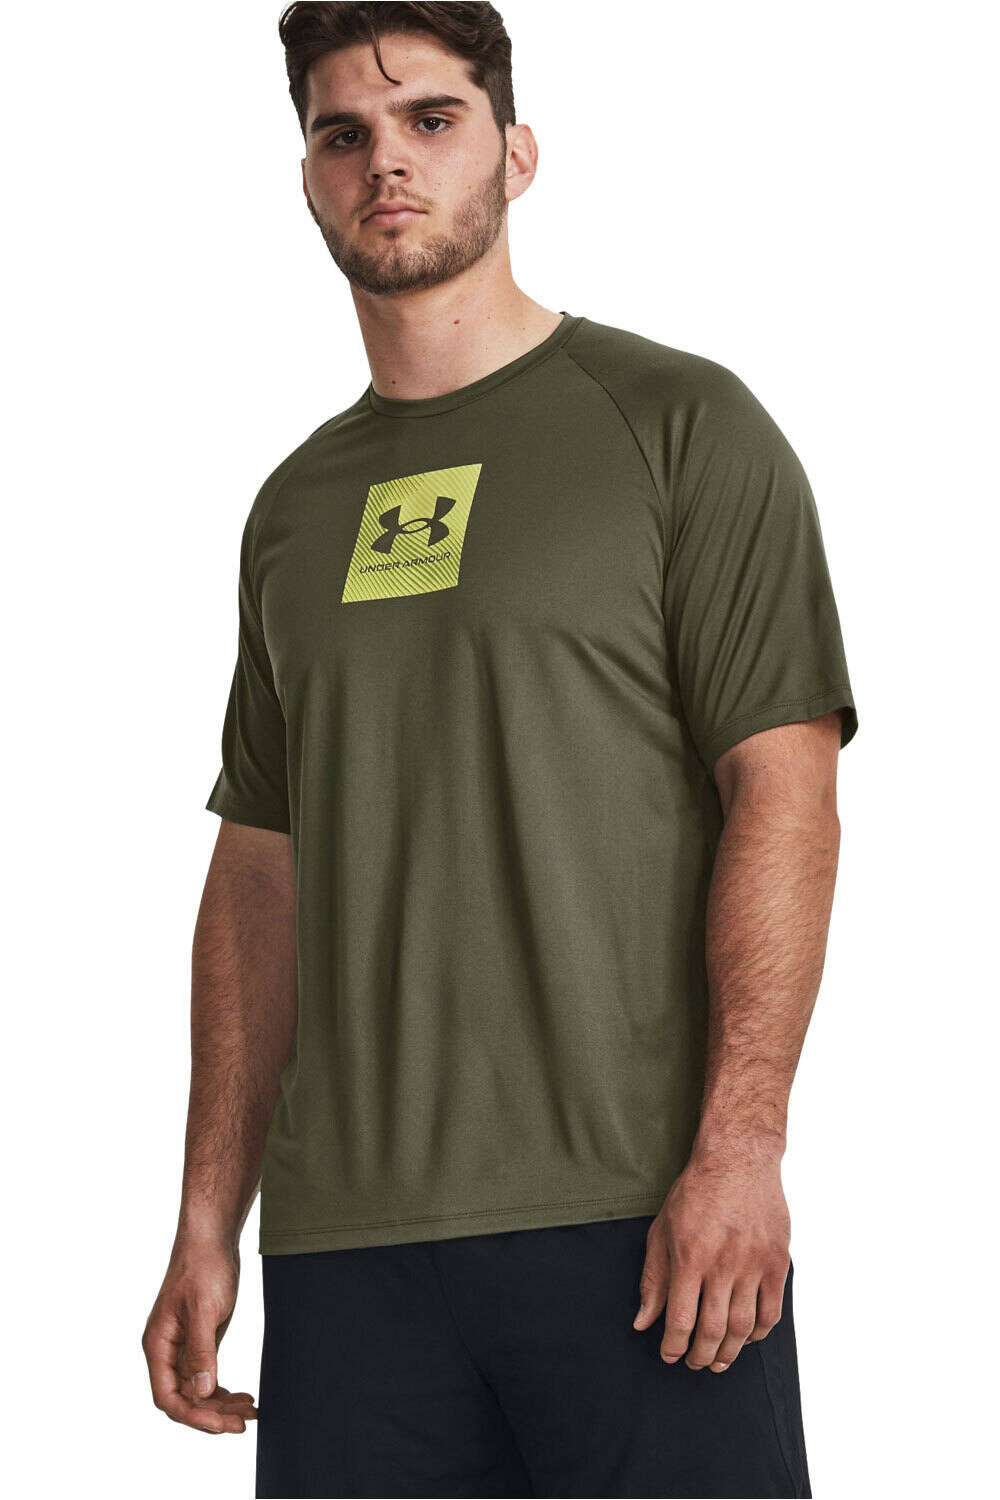 Under Armour camiseta fitness hombre UA Tech Prt Fill SS vista frontal